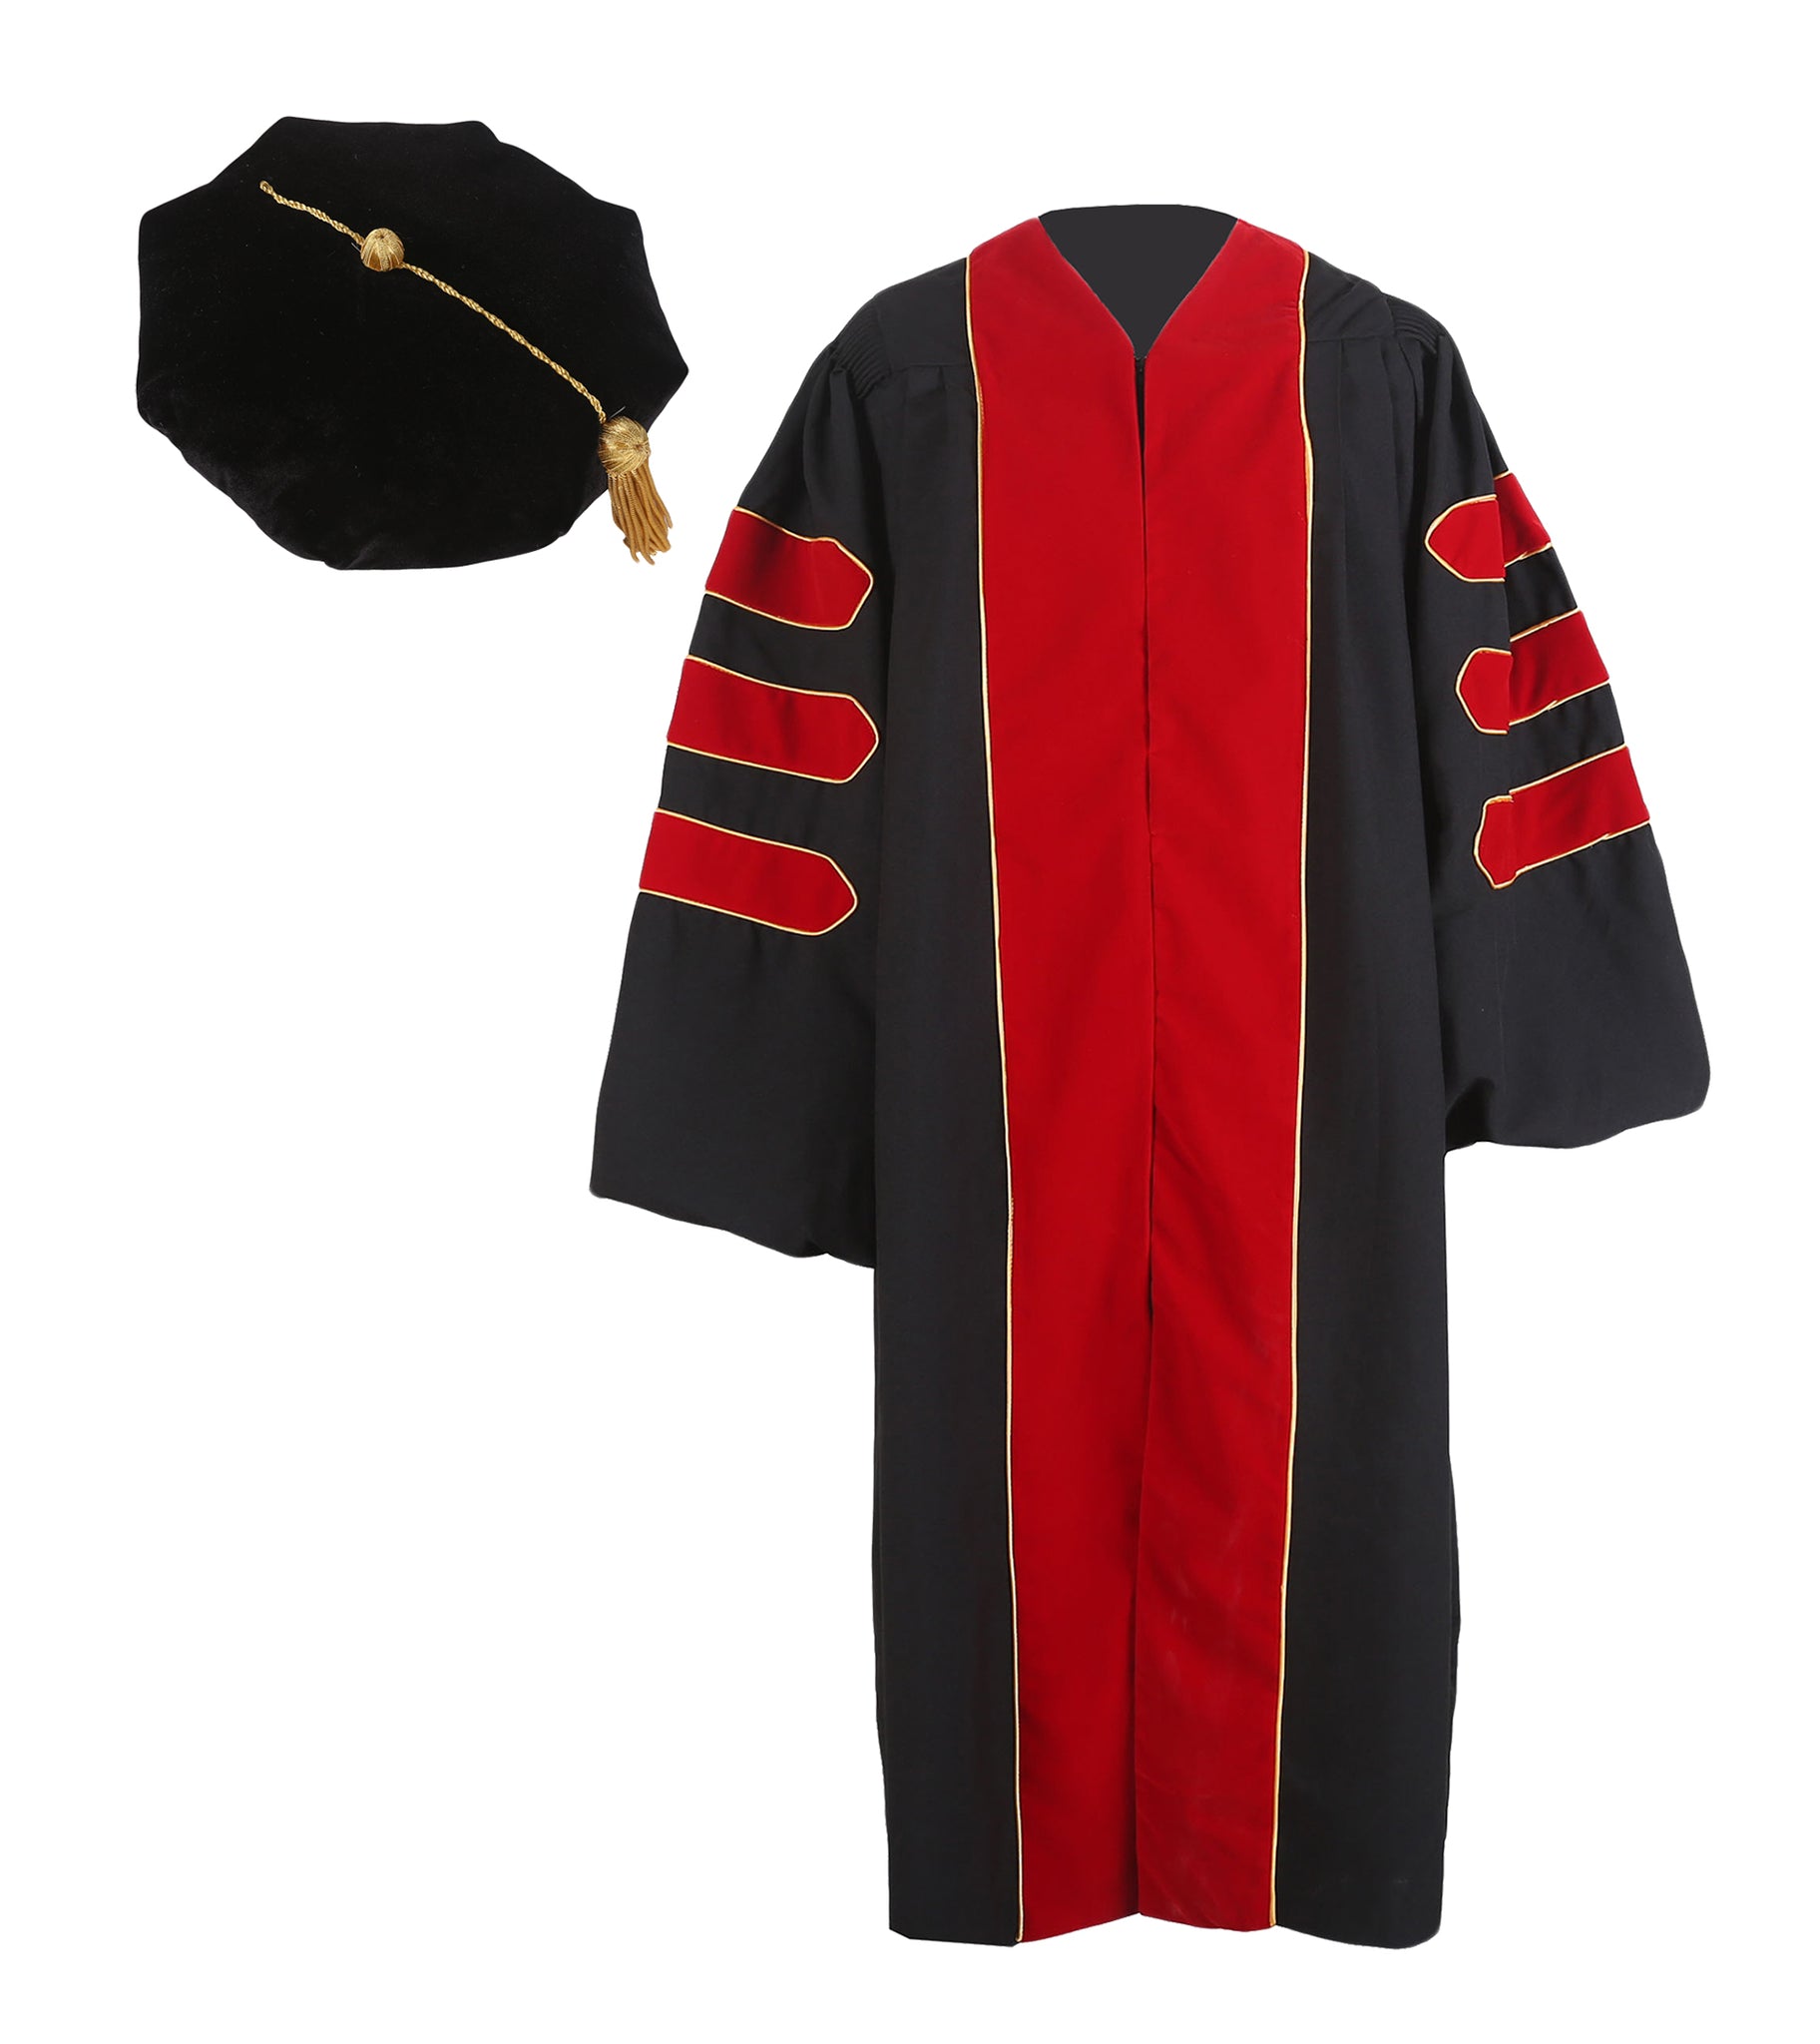 soas phd graduation gown